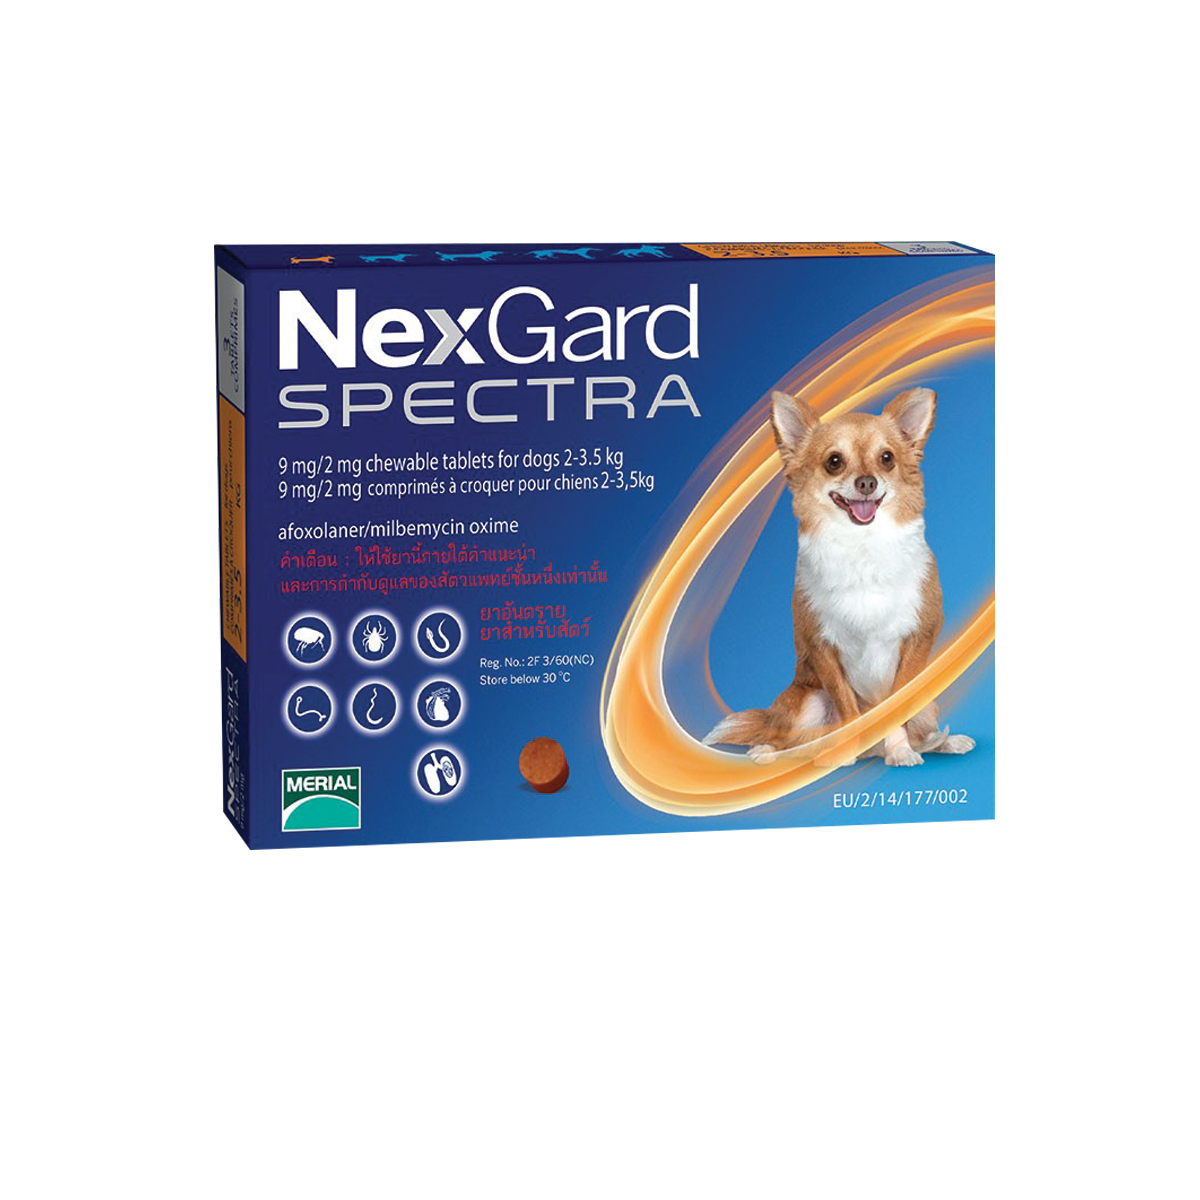 NexGard Spectra Chewable Tablets For Extra Small Dogs เน็กการ์ด สเป็คต้าร์ ยากำจัดเห็บ หมัด สุนัข ชนิดเม็ดเคี้ยว สำหรับสุนัขที่มีน้ำหนัก 2-3.5 กิโลกรัม